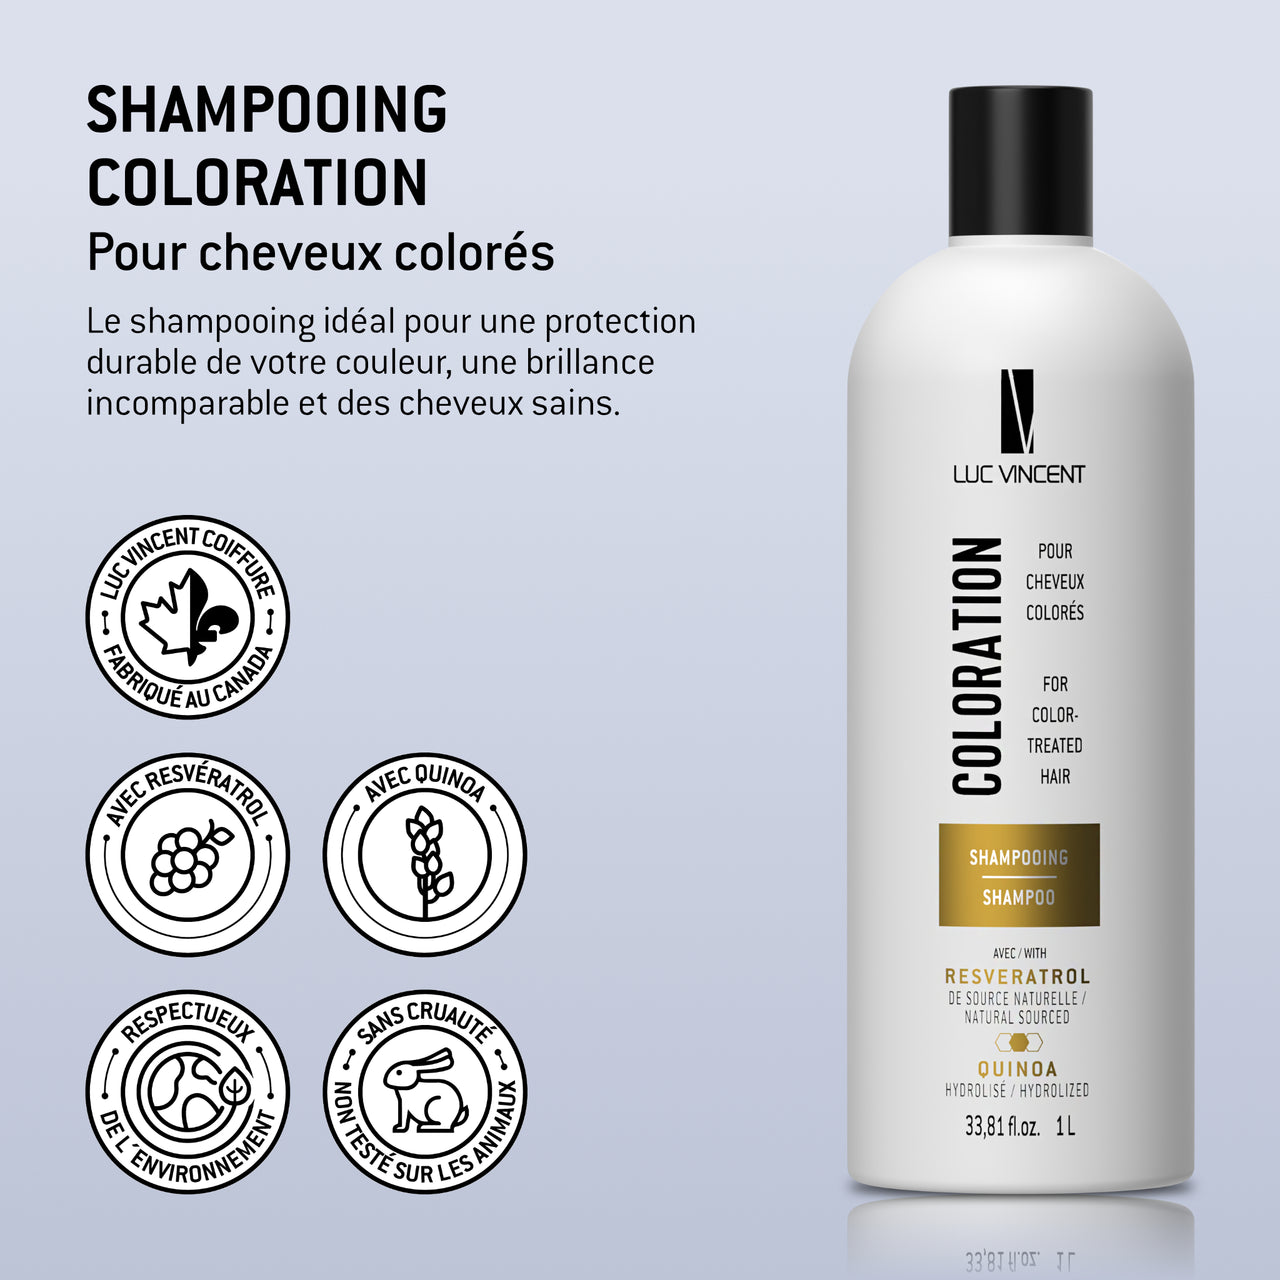 Shampooing coloration - Luc Vincent